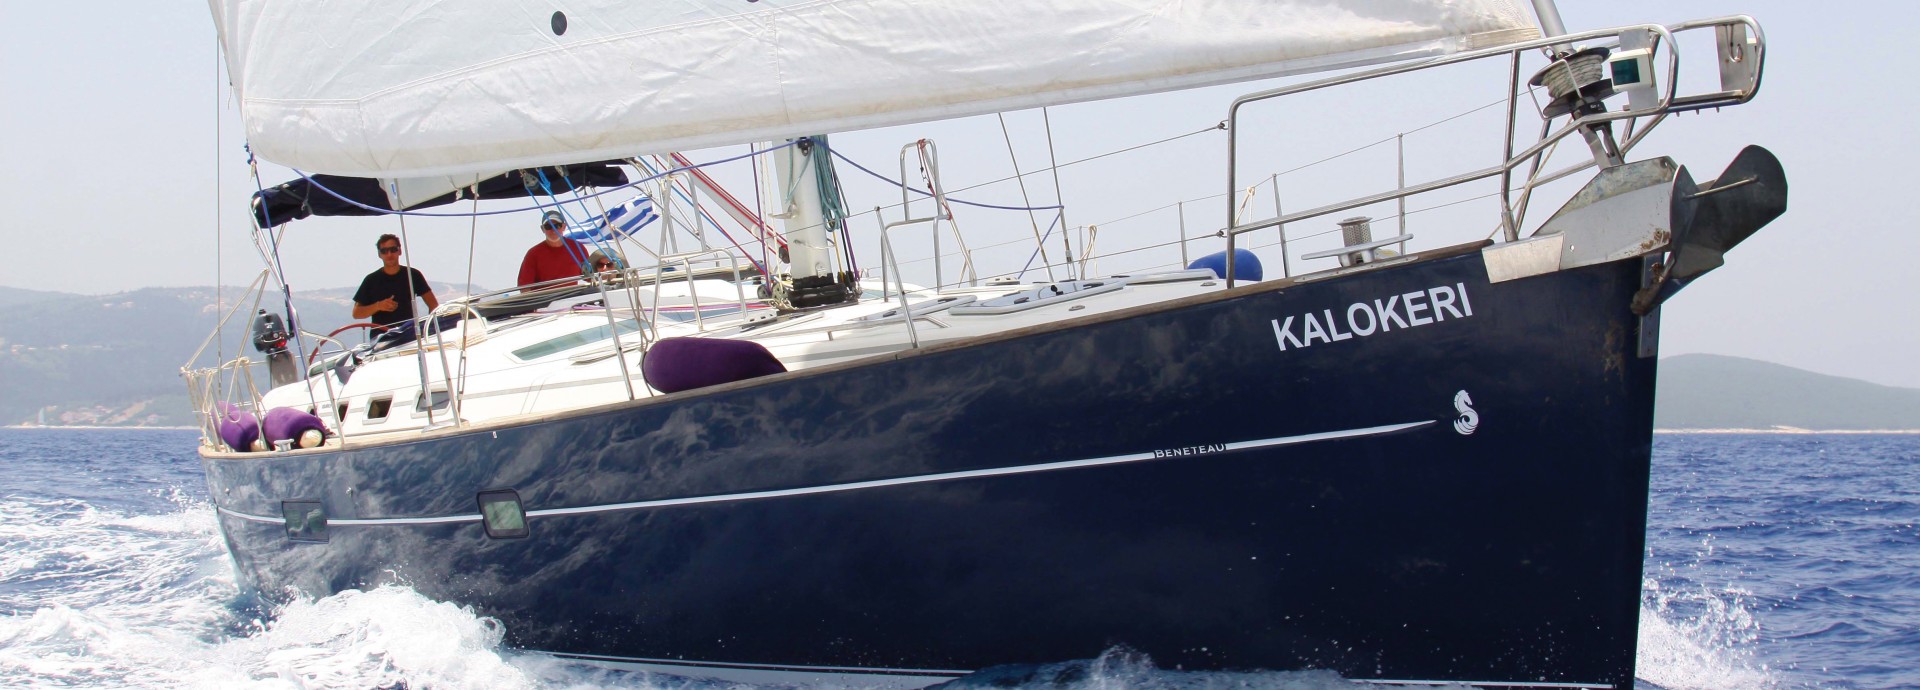 Beneteau 52.3 Kalokeri sailing past Kefalonia